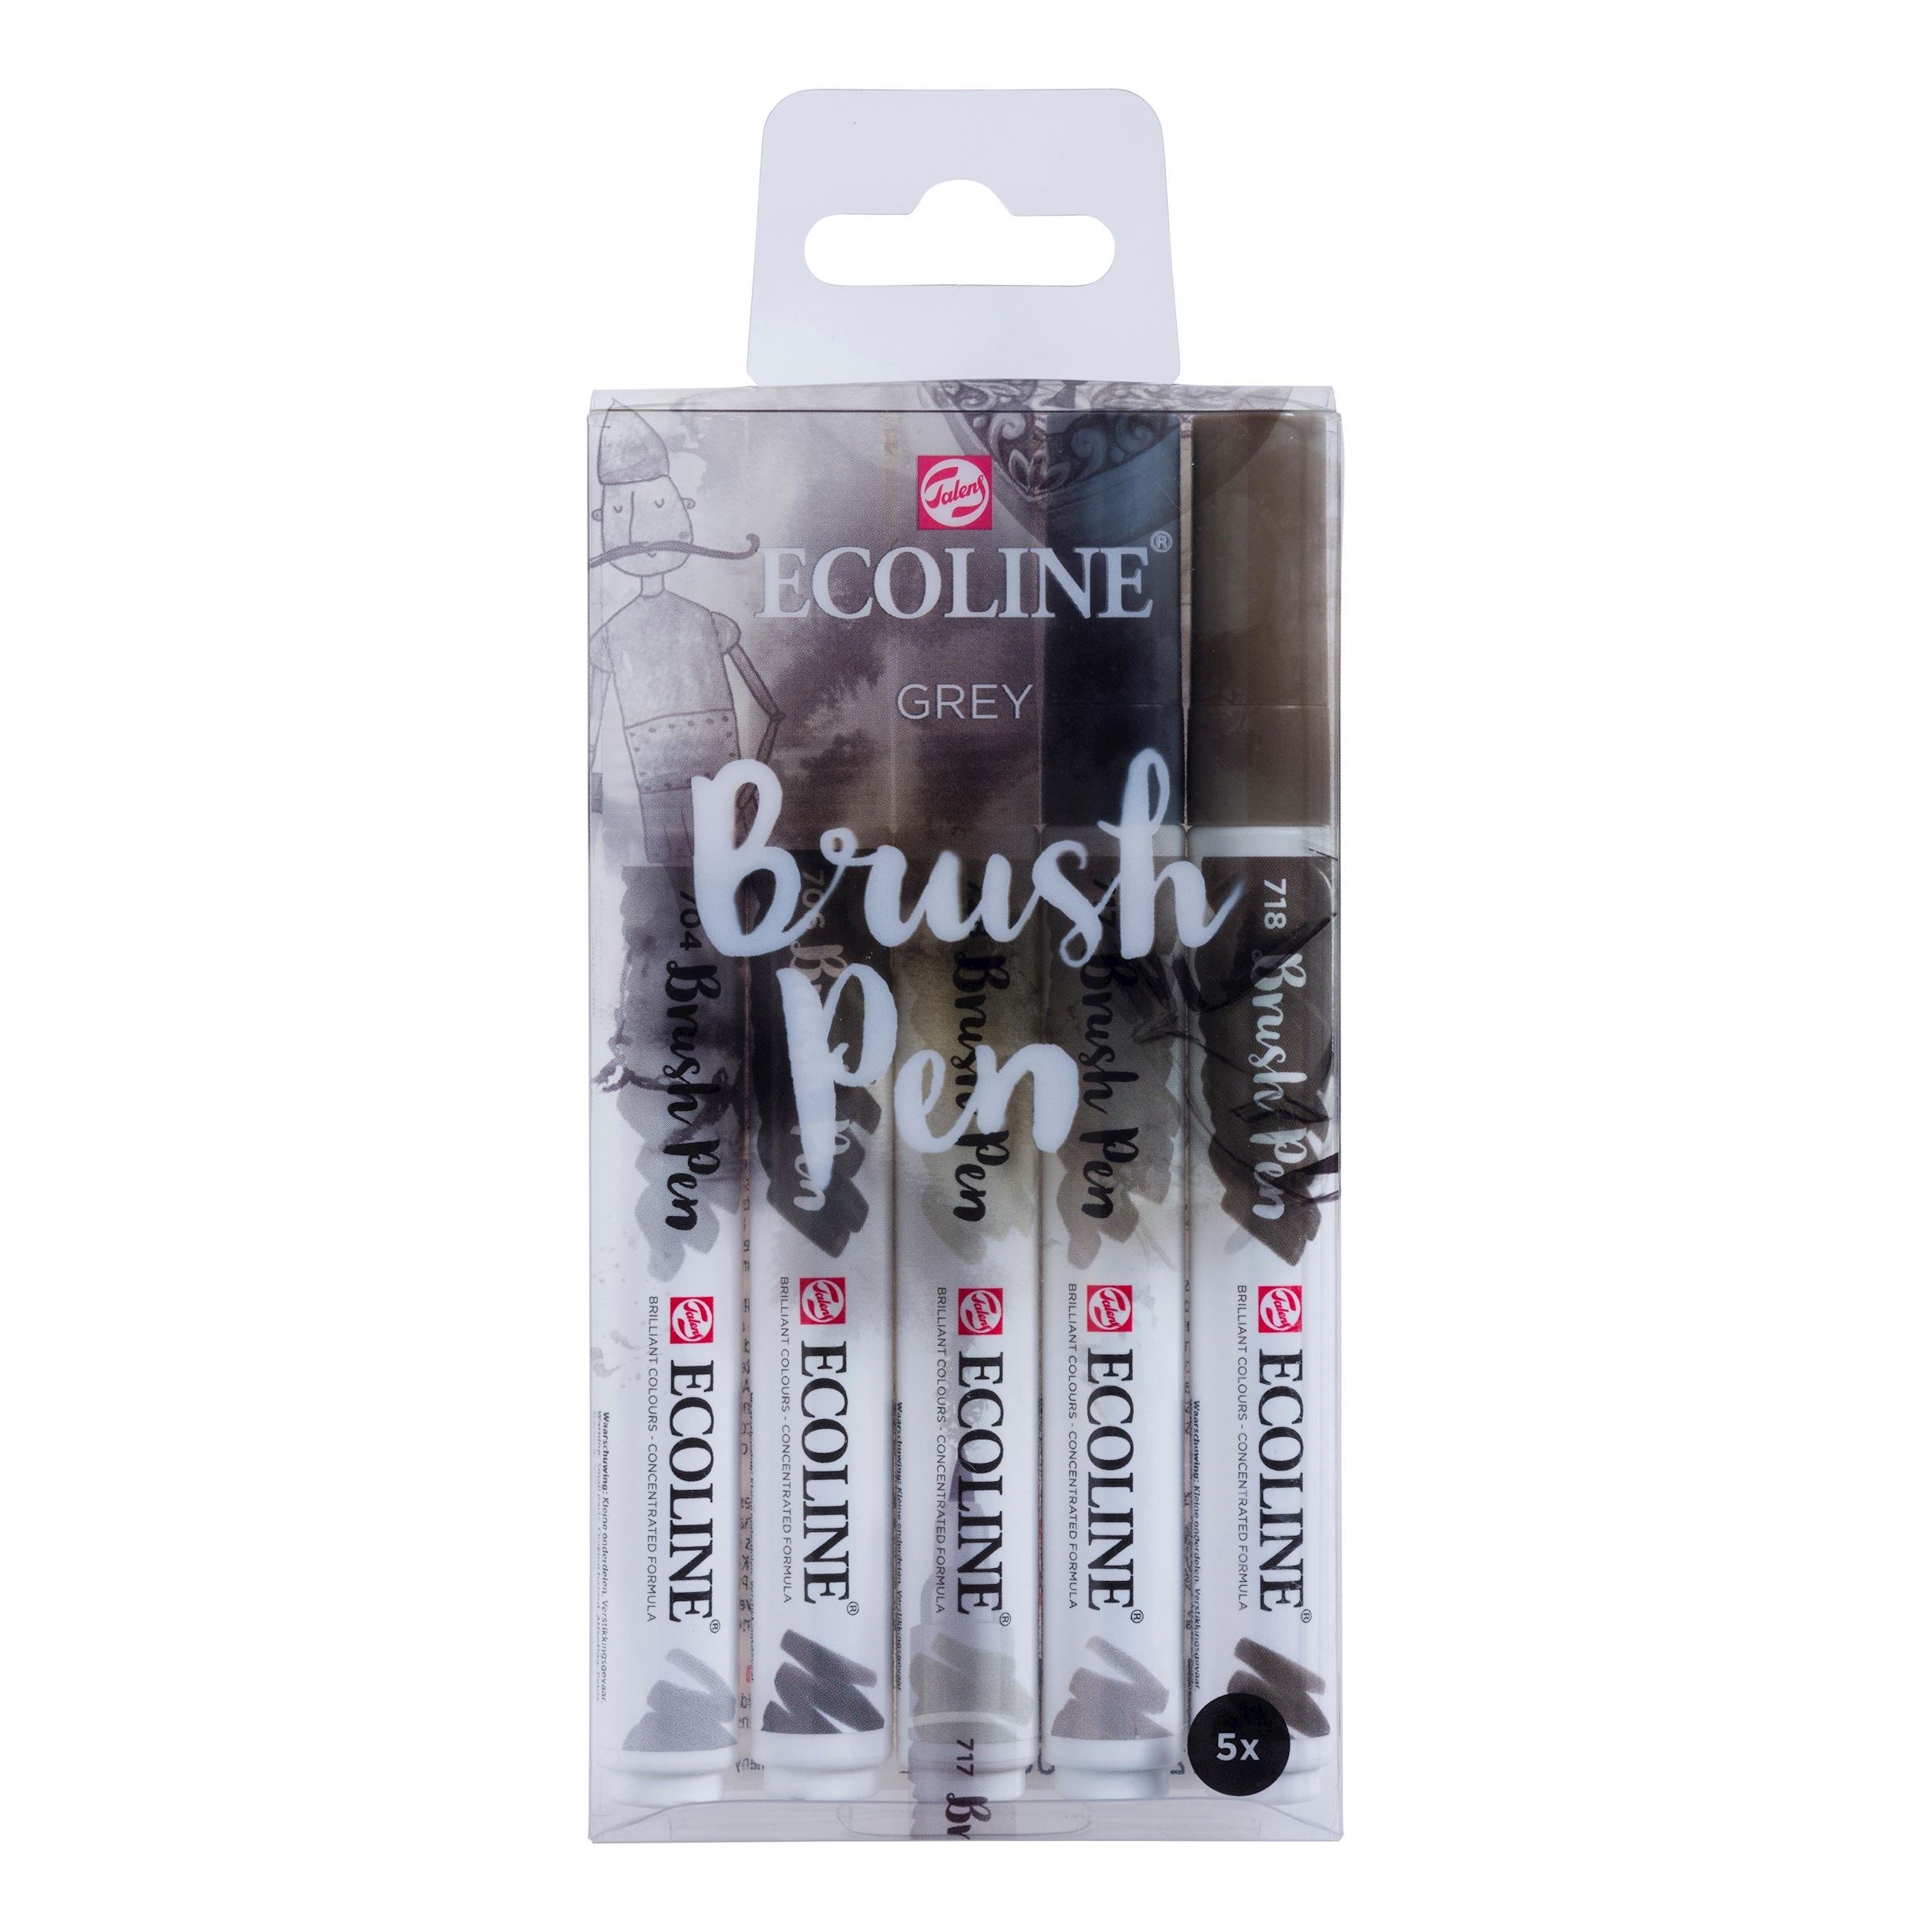 Set Talens Ecoline Brush pennen 11509907 Grey